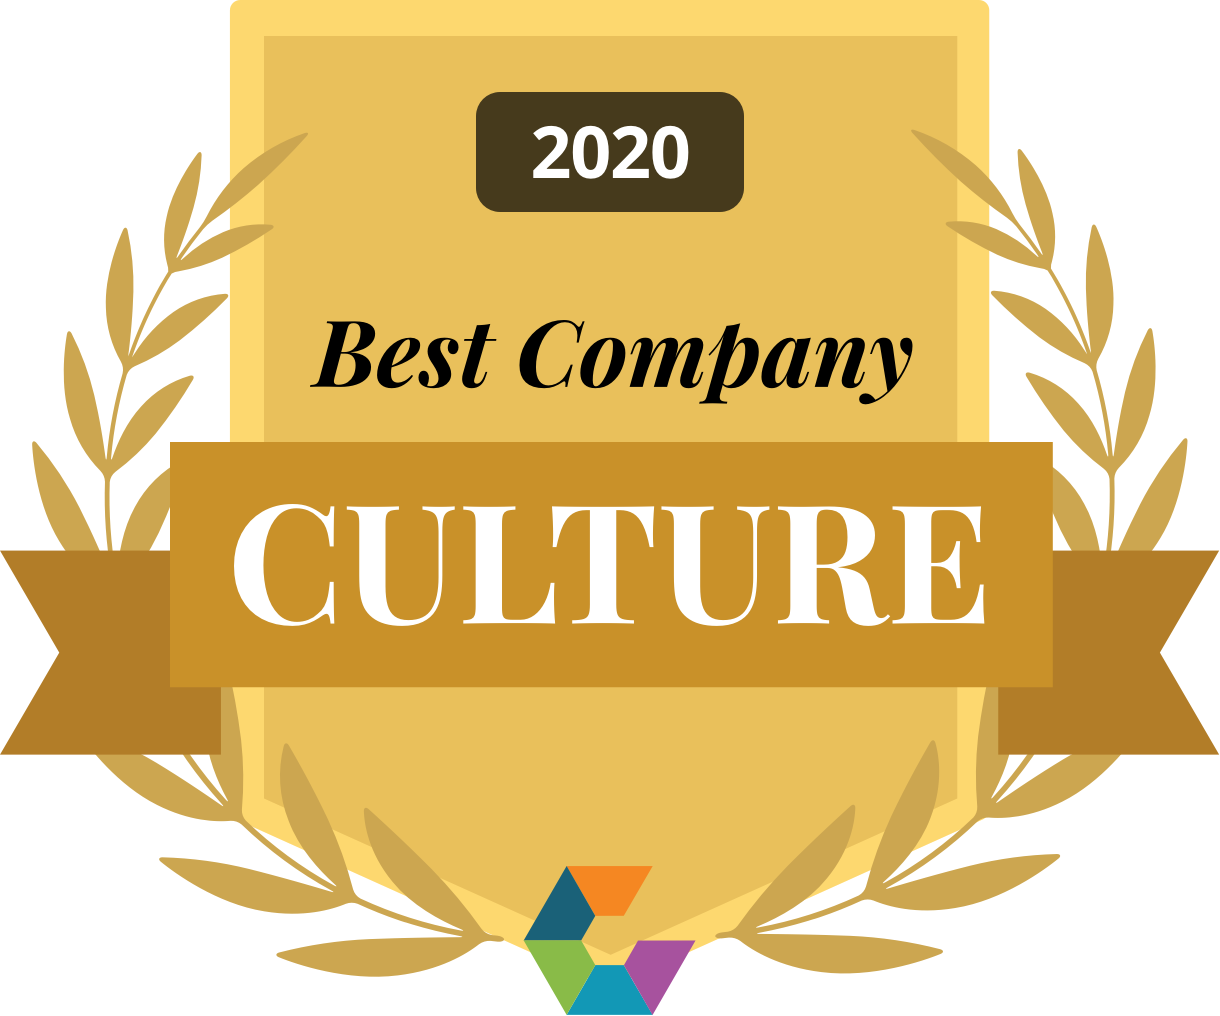 Best Company Culture Award 